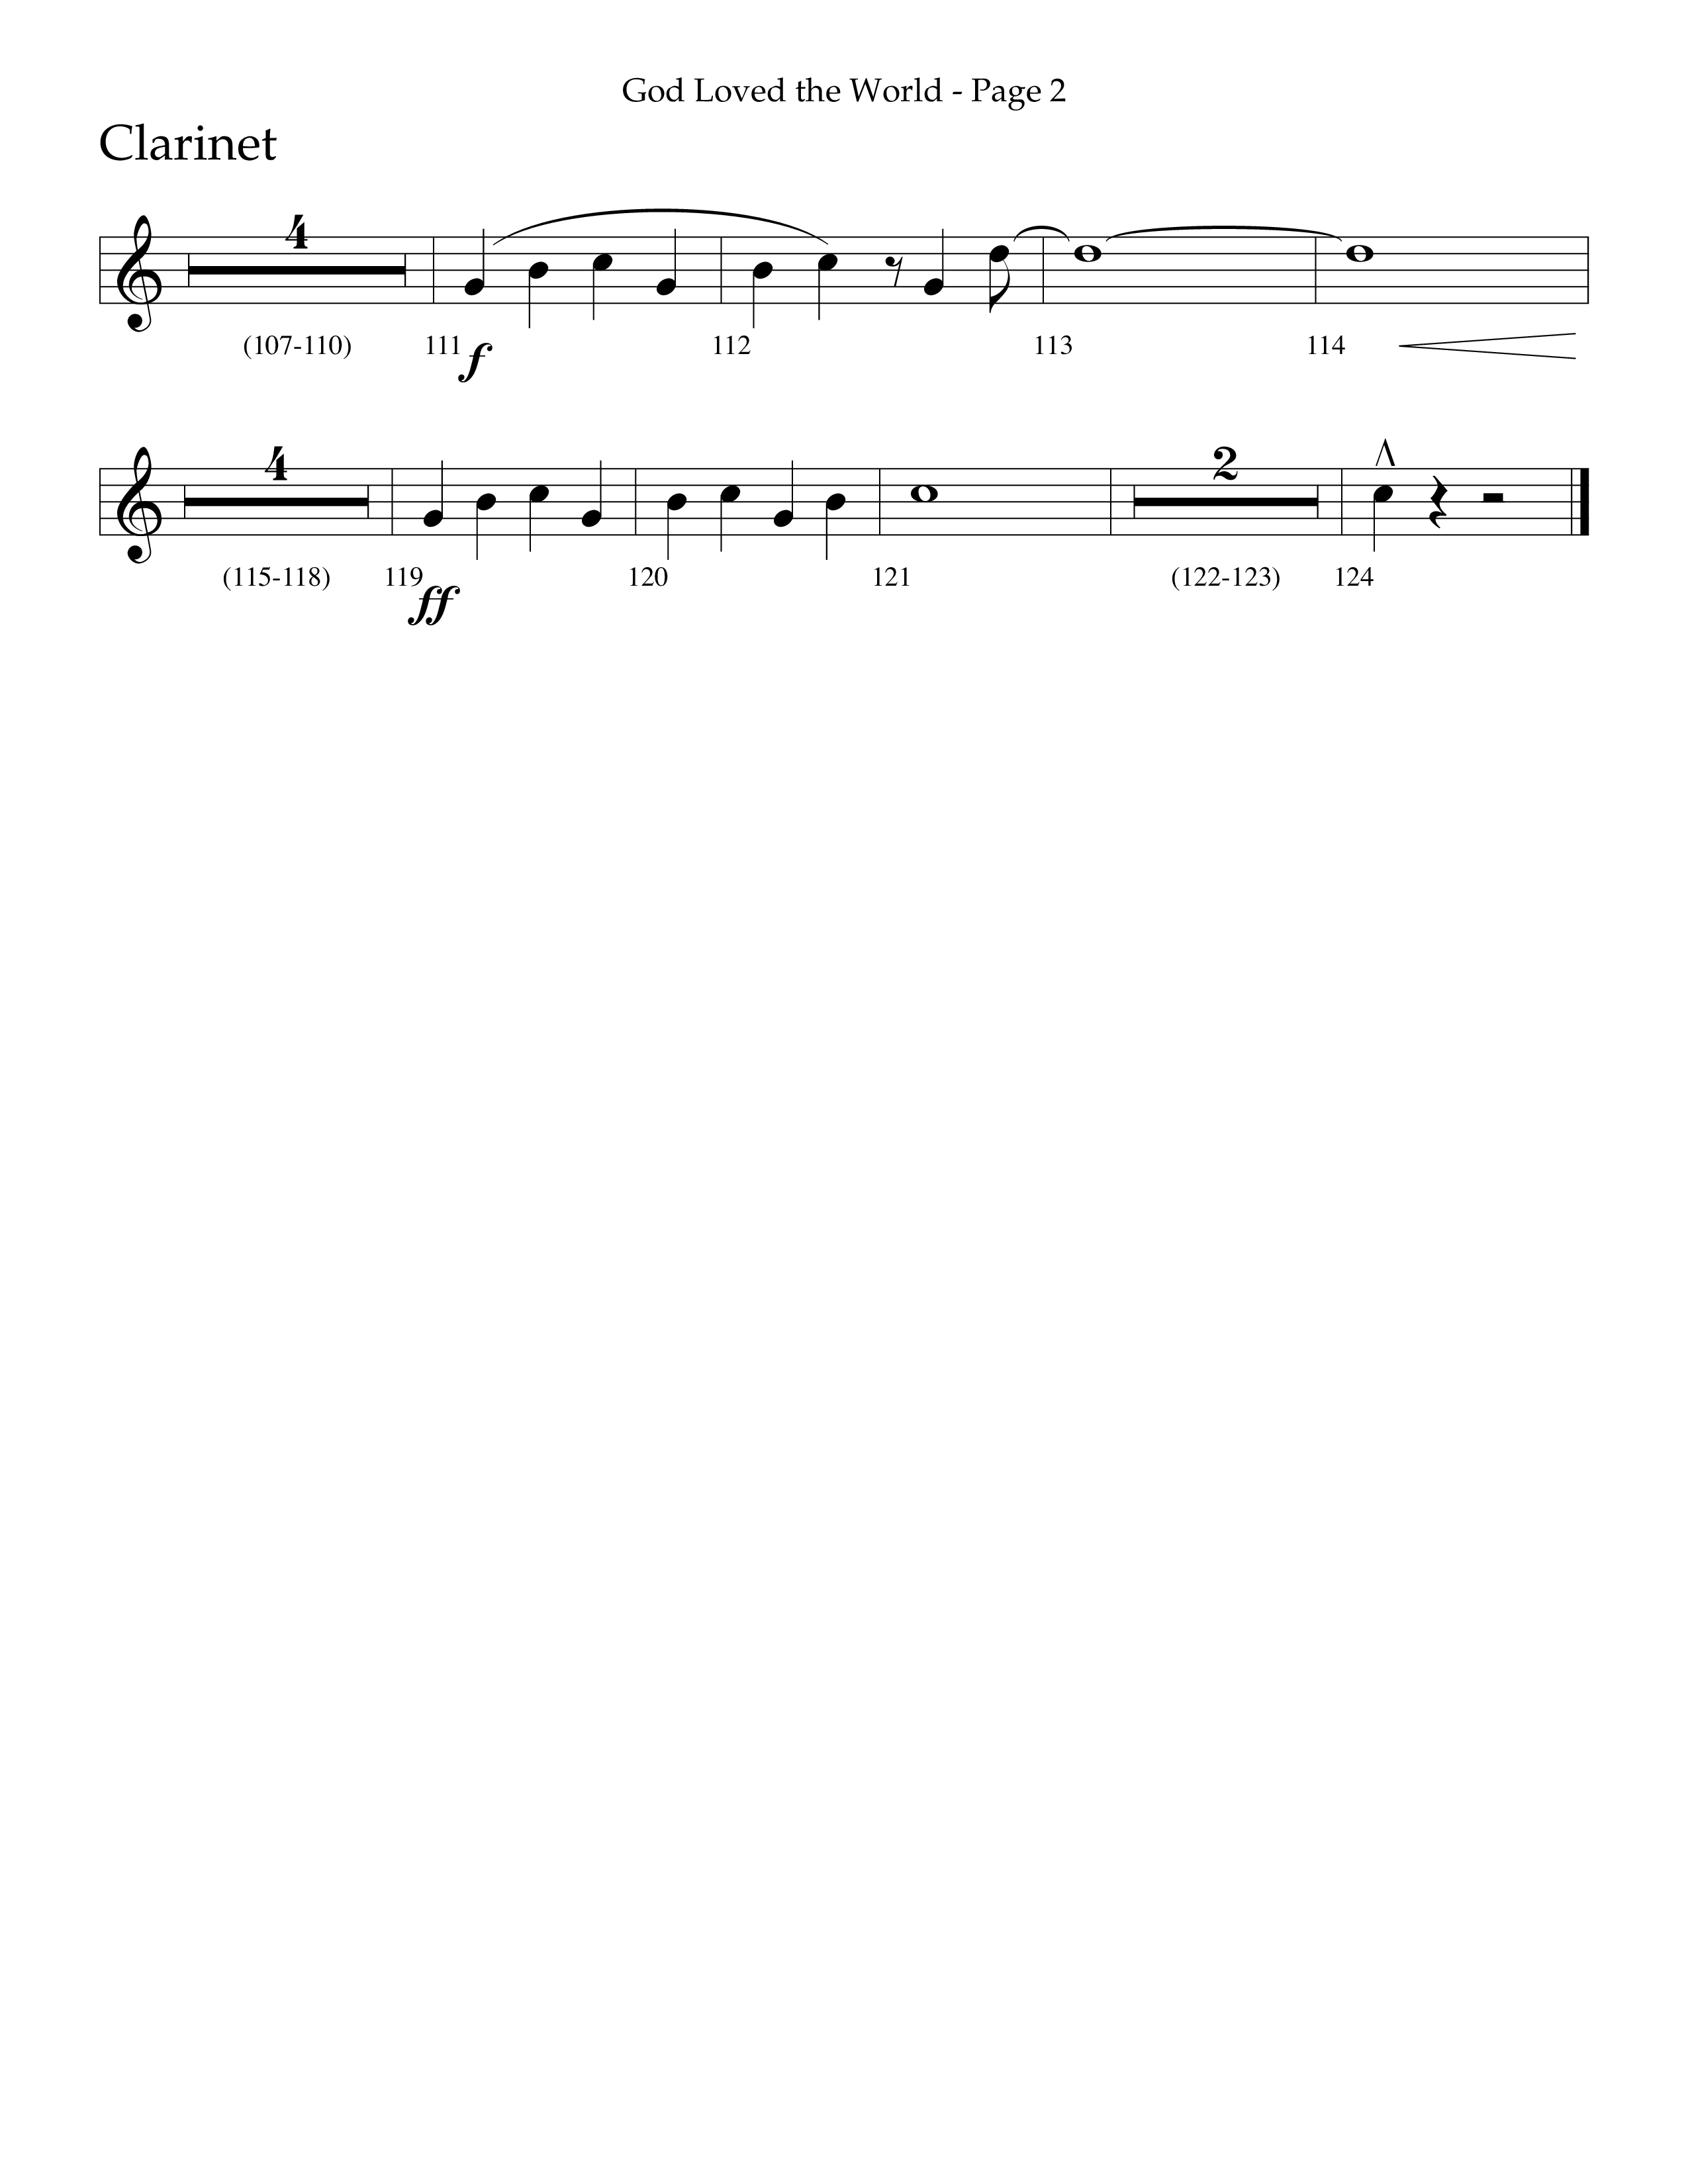 God Loved The World (Choral Anthem SATB) Clarinet 1/2 (Lifeway Choral / Arr. Cliff Duren)